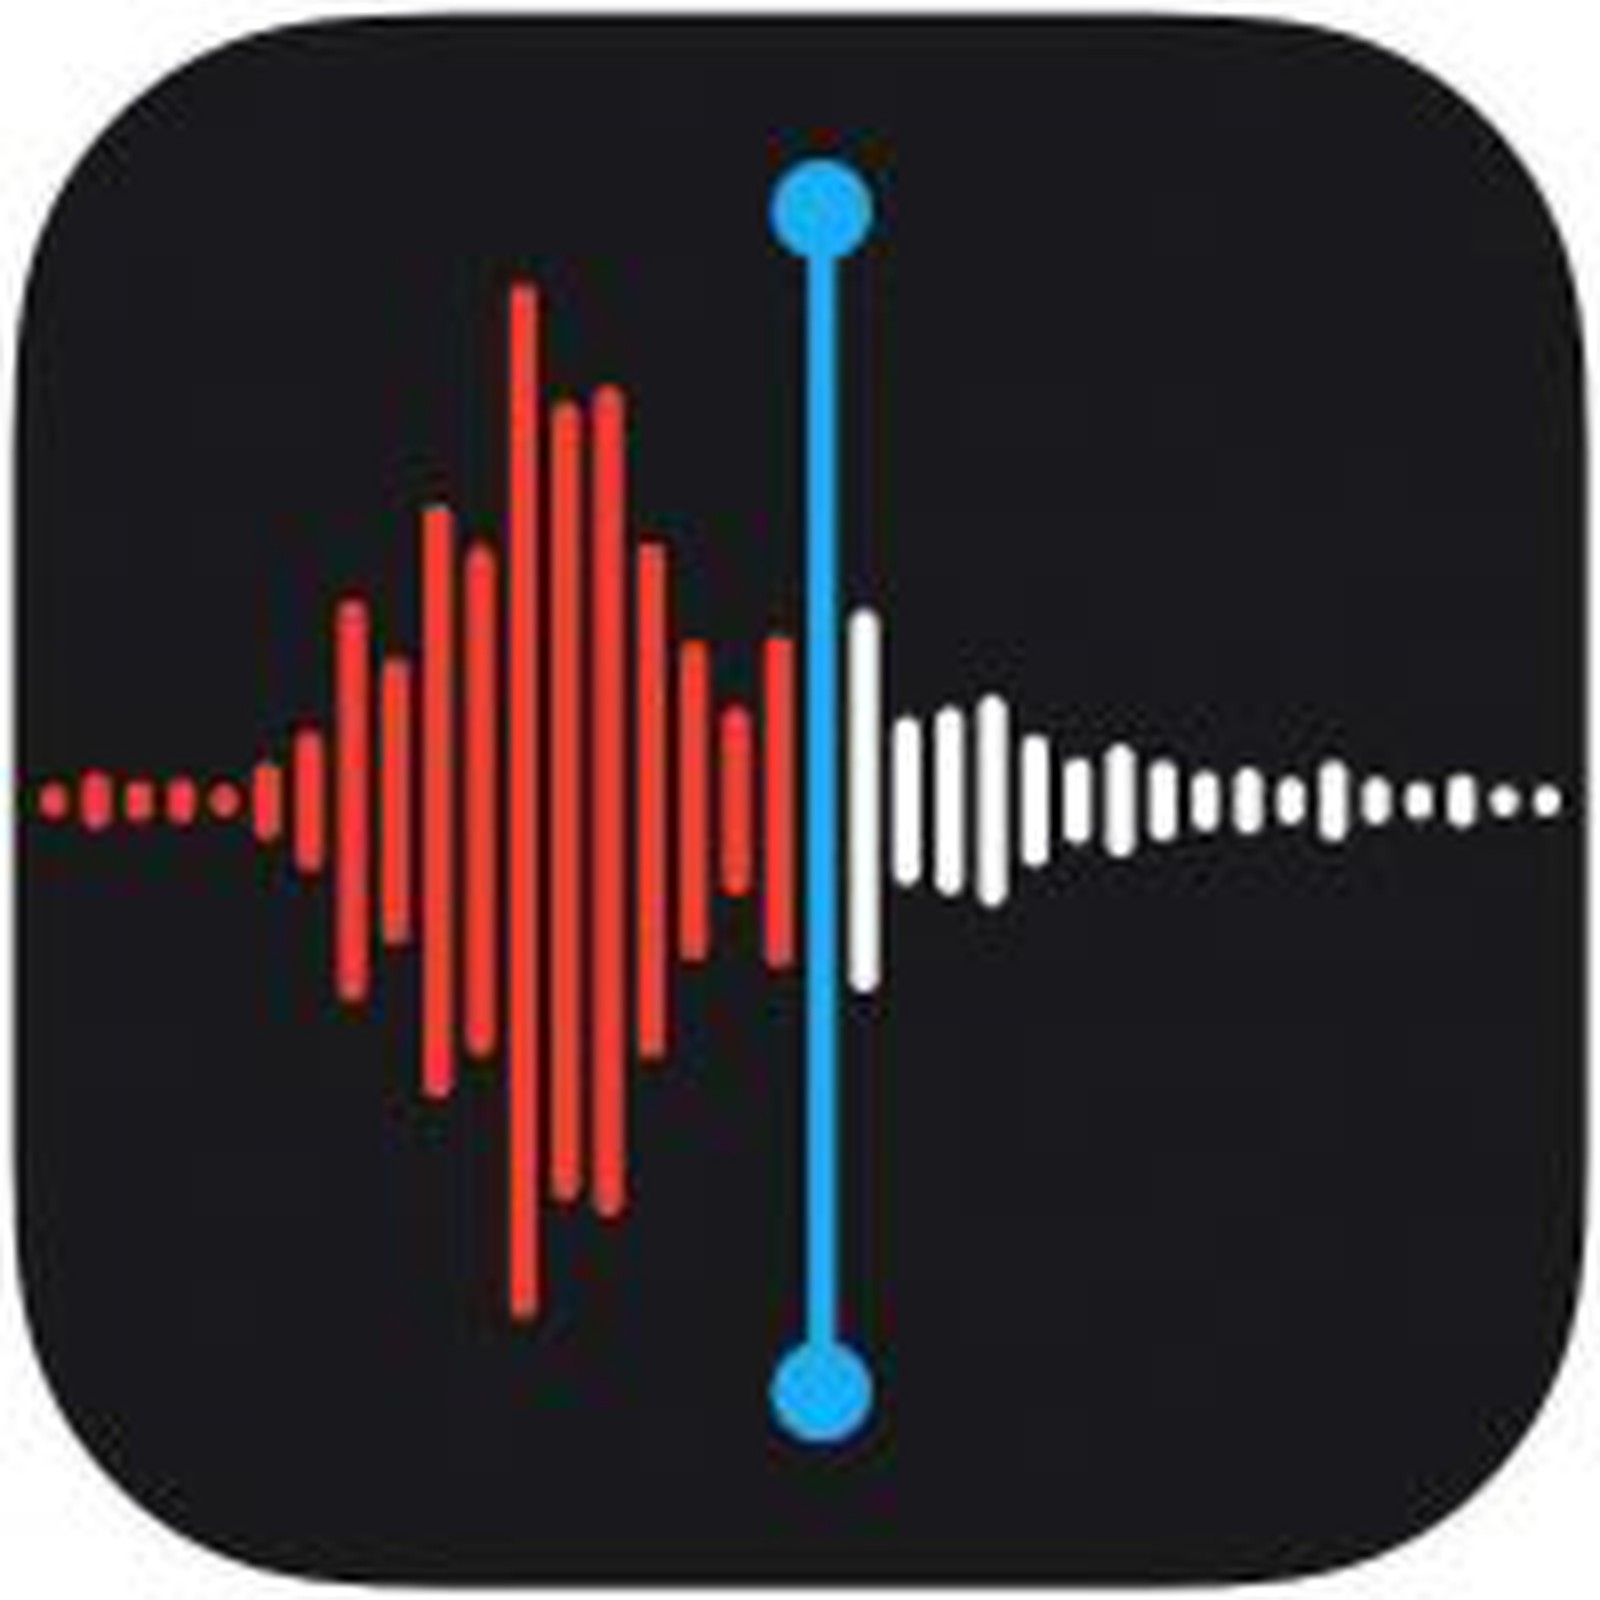 iOS 14: How to Enhance Voice Memo Recordings on iPhone and iPad - MacRumors